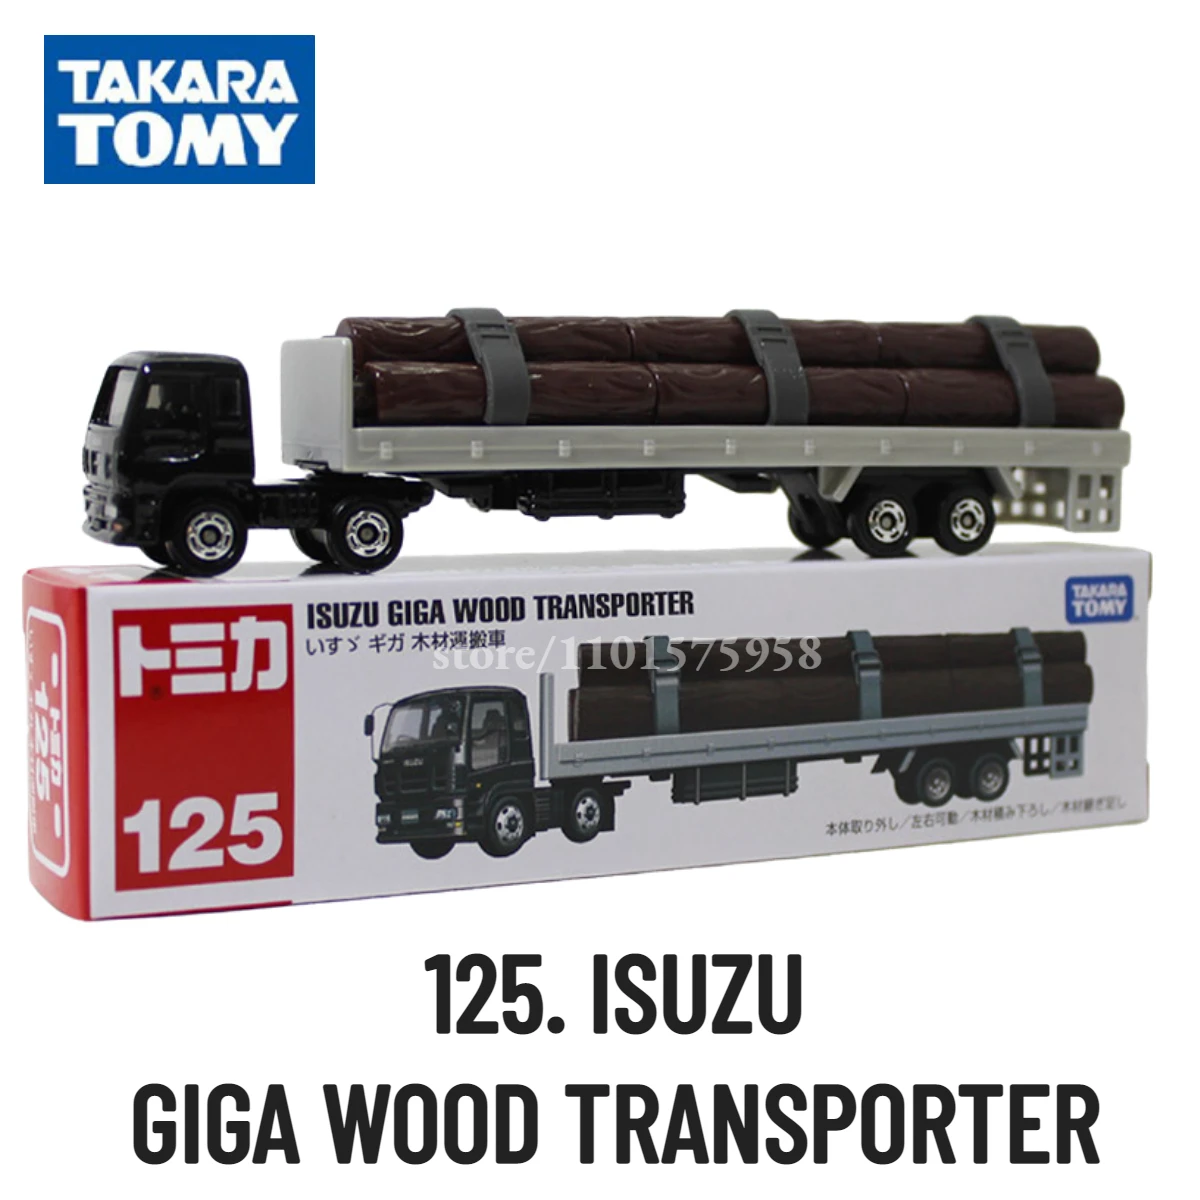 Takara Tomy Tomica Special Vehicle, 125. ISUZU GIGA WOOD TRANSPORTER Car Model Truck Miniature Toy for Boy